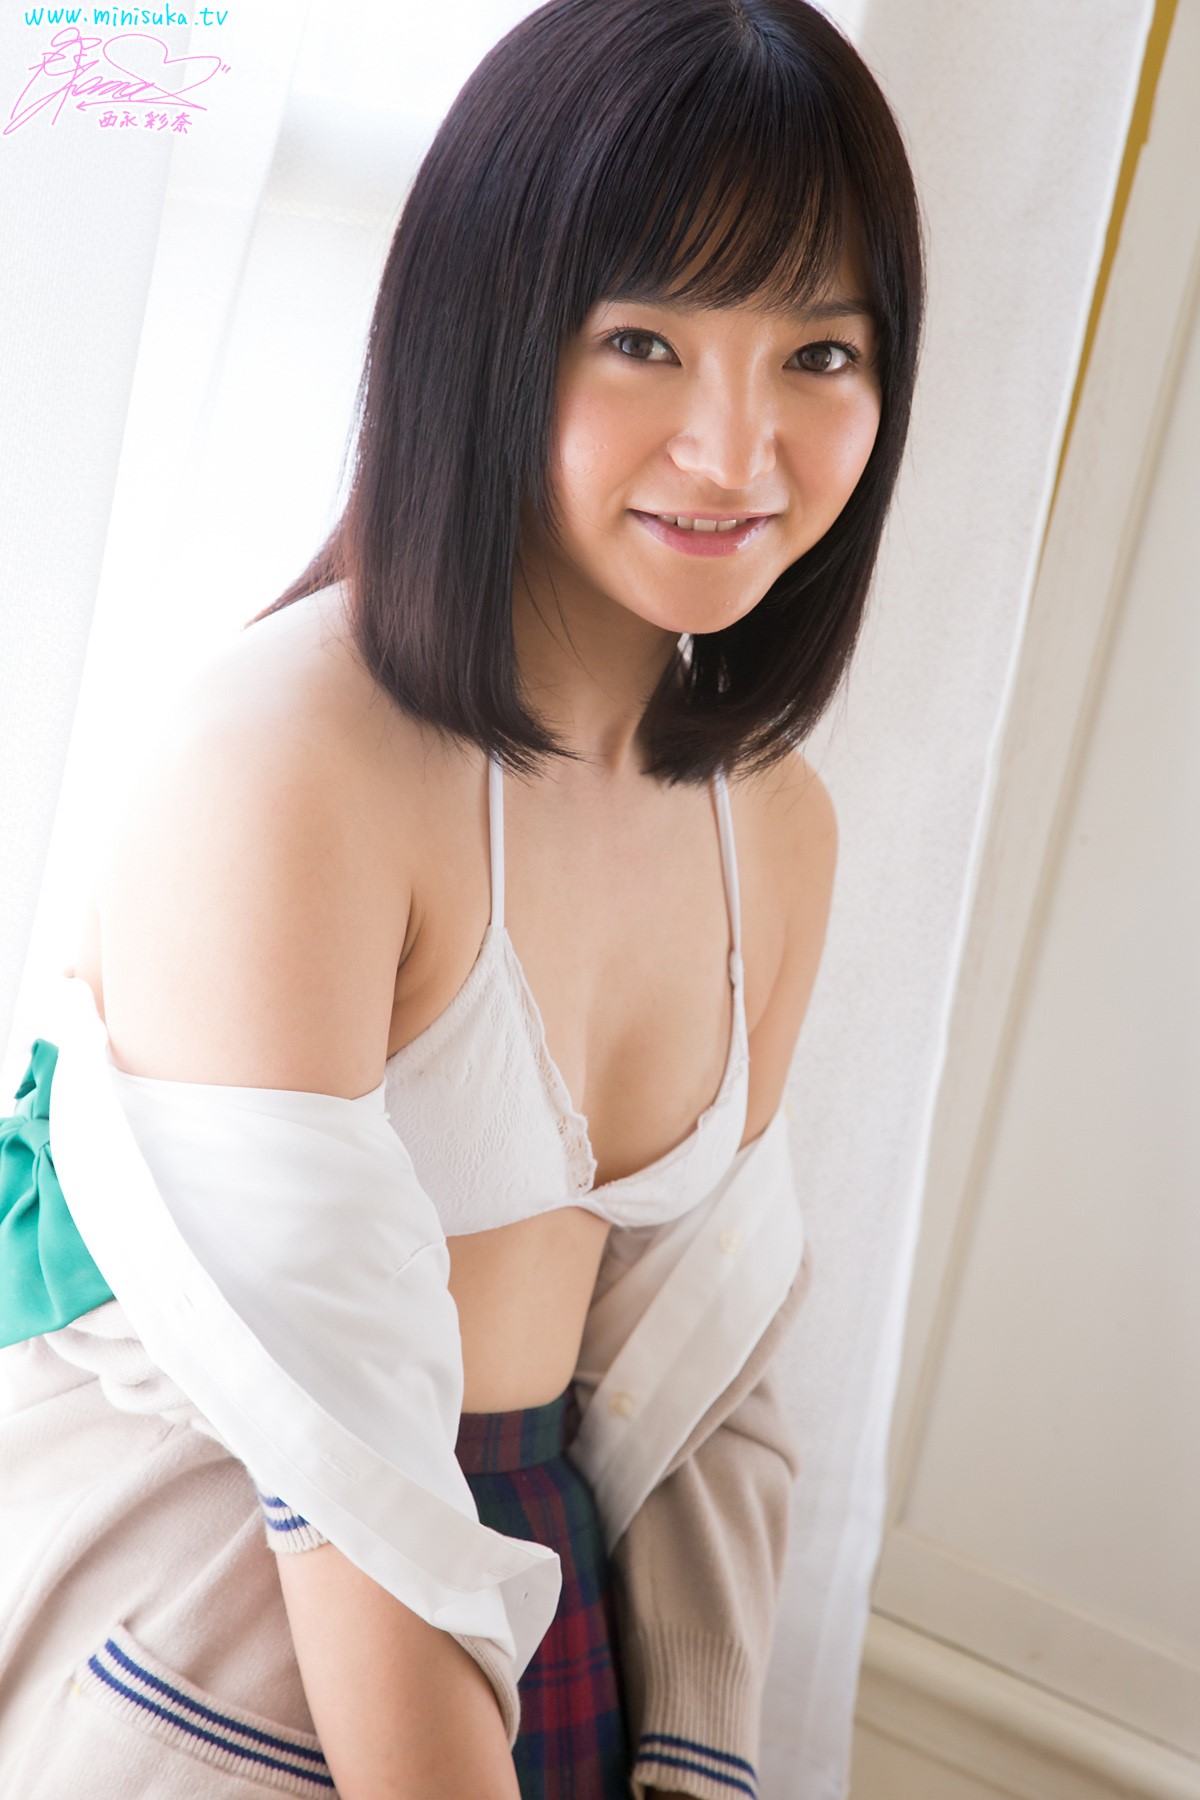 Minisuka tv 2014 05 15 Ayana Nishinaga Secret Gallery STAGE1 6 1 0039 5574125169.jpg